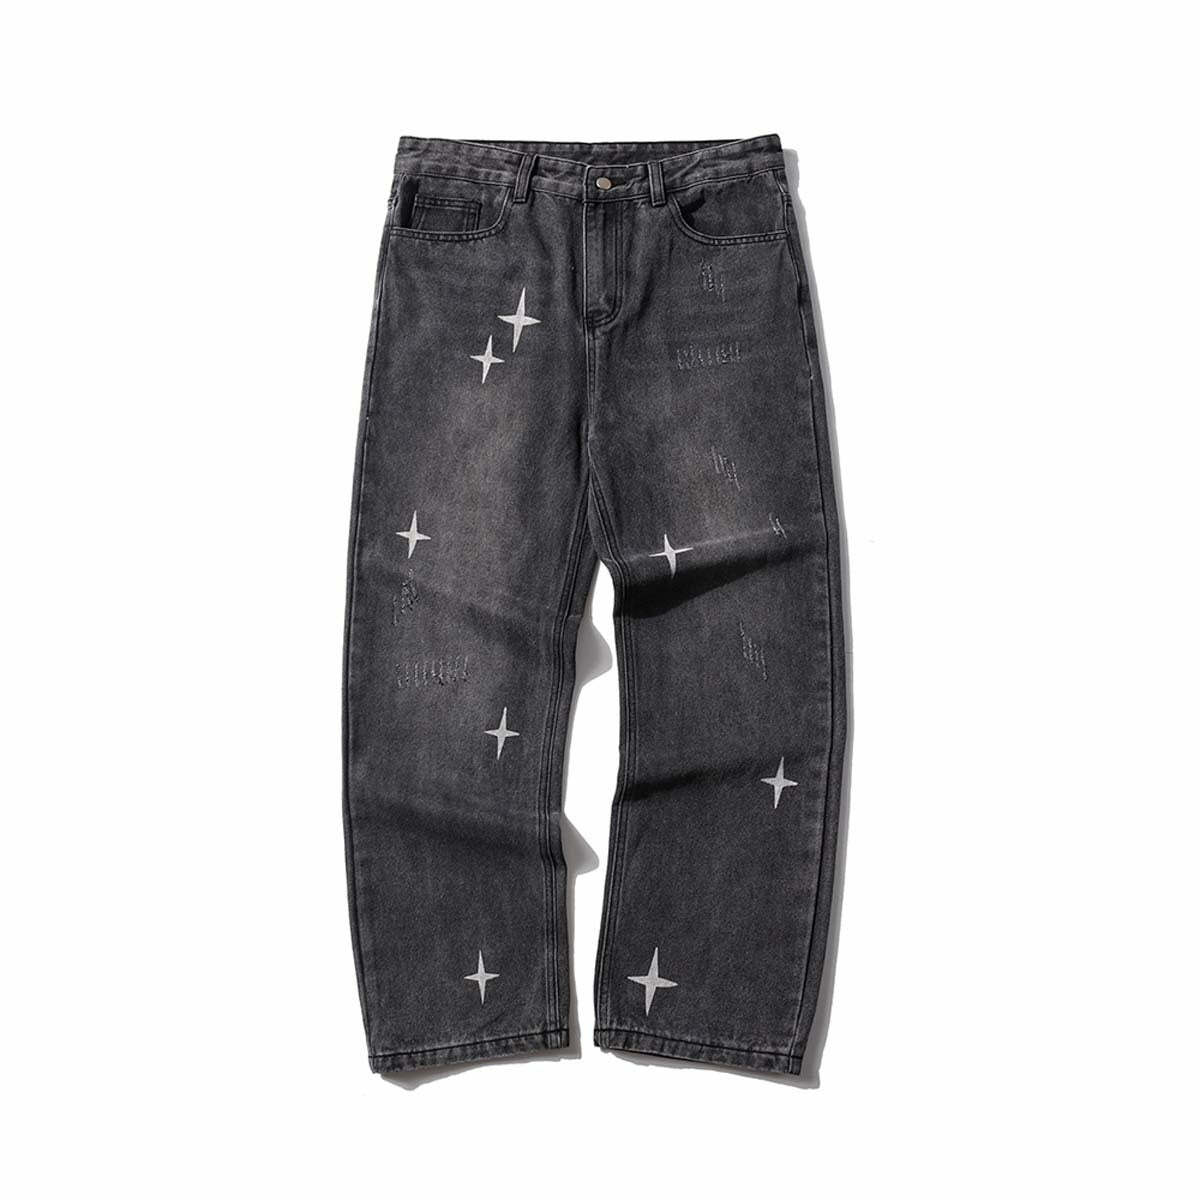 shredded raw jeans edgy & distinctive streetwear 5111